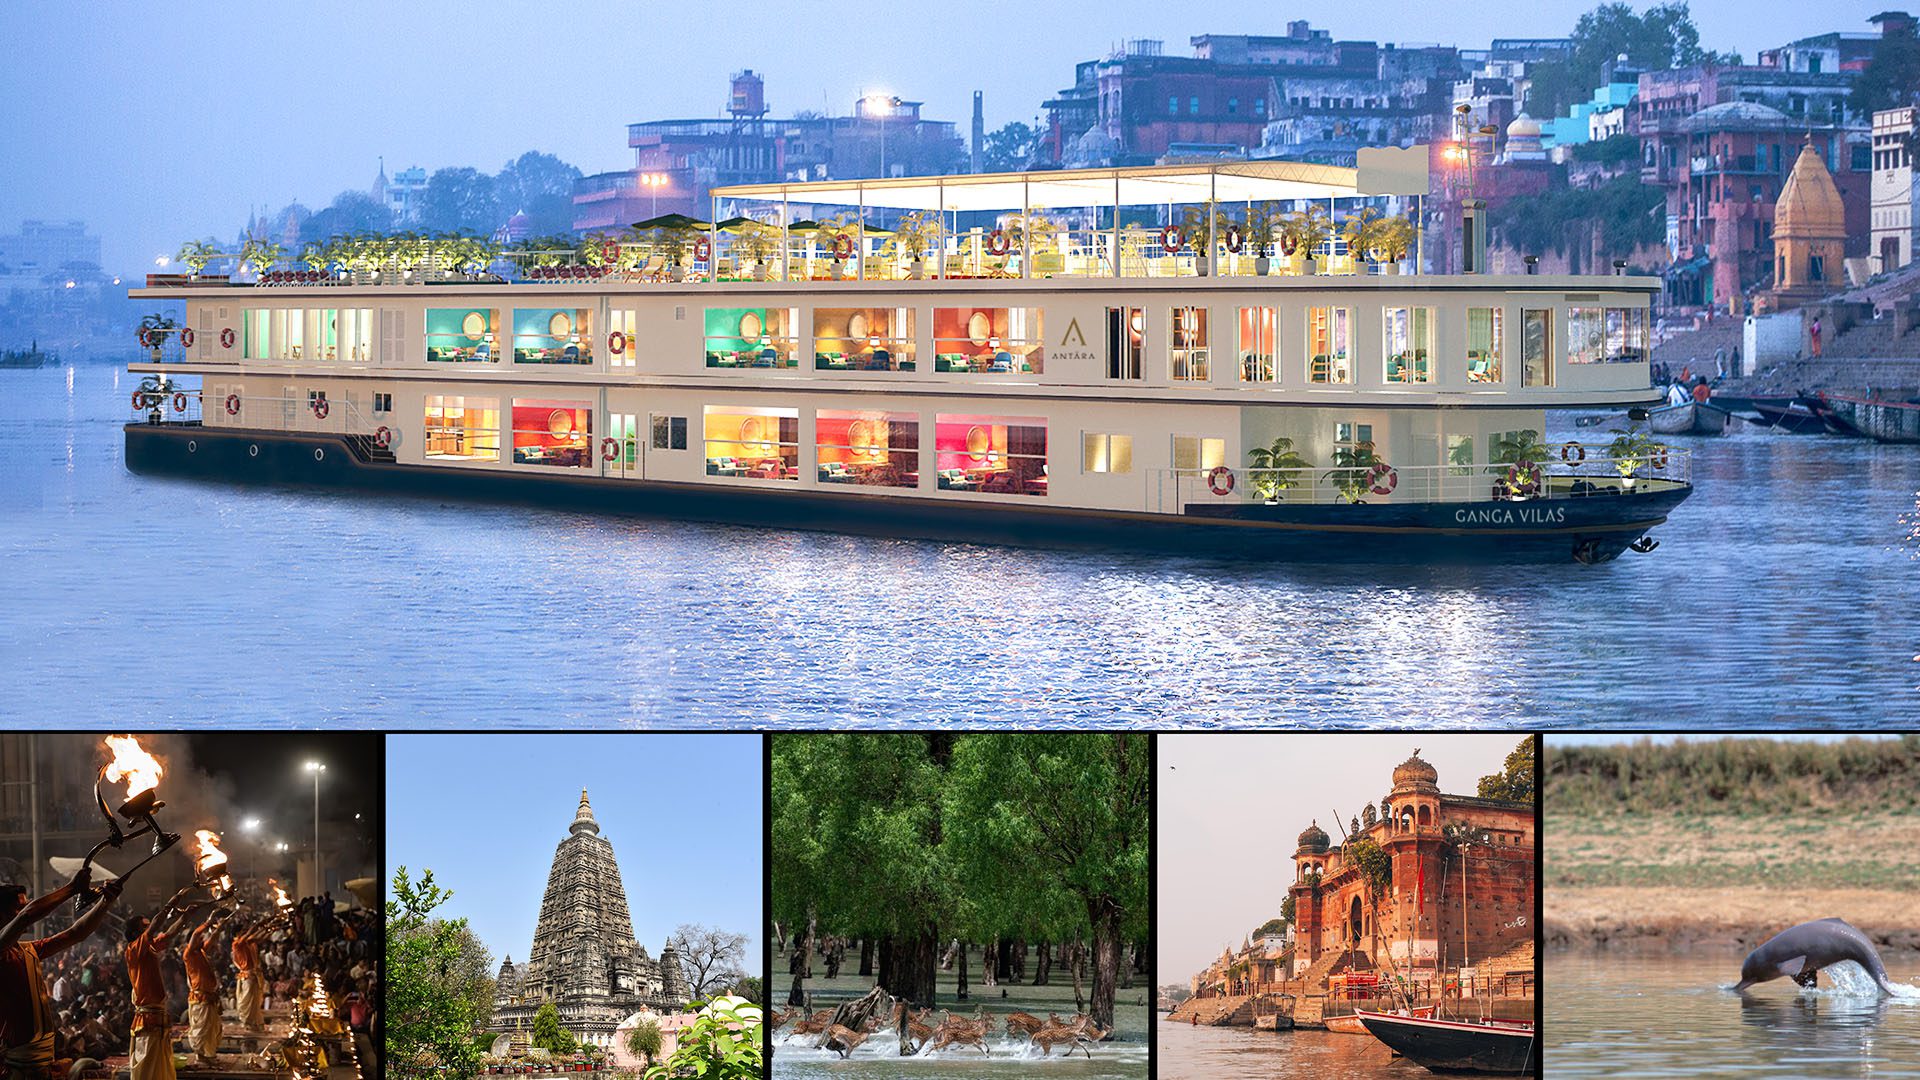 India’s New Luxury River Cruise: Antara Cruises’s MV Ganga Vilas